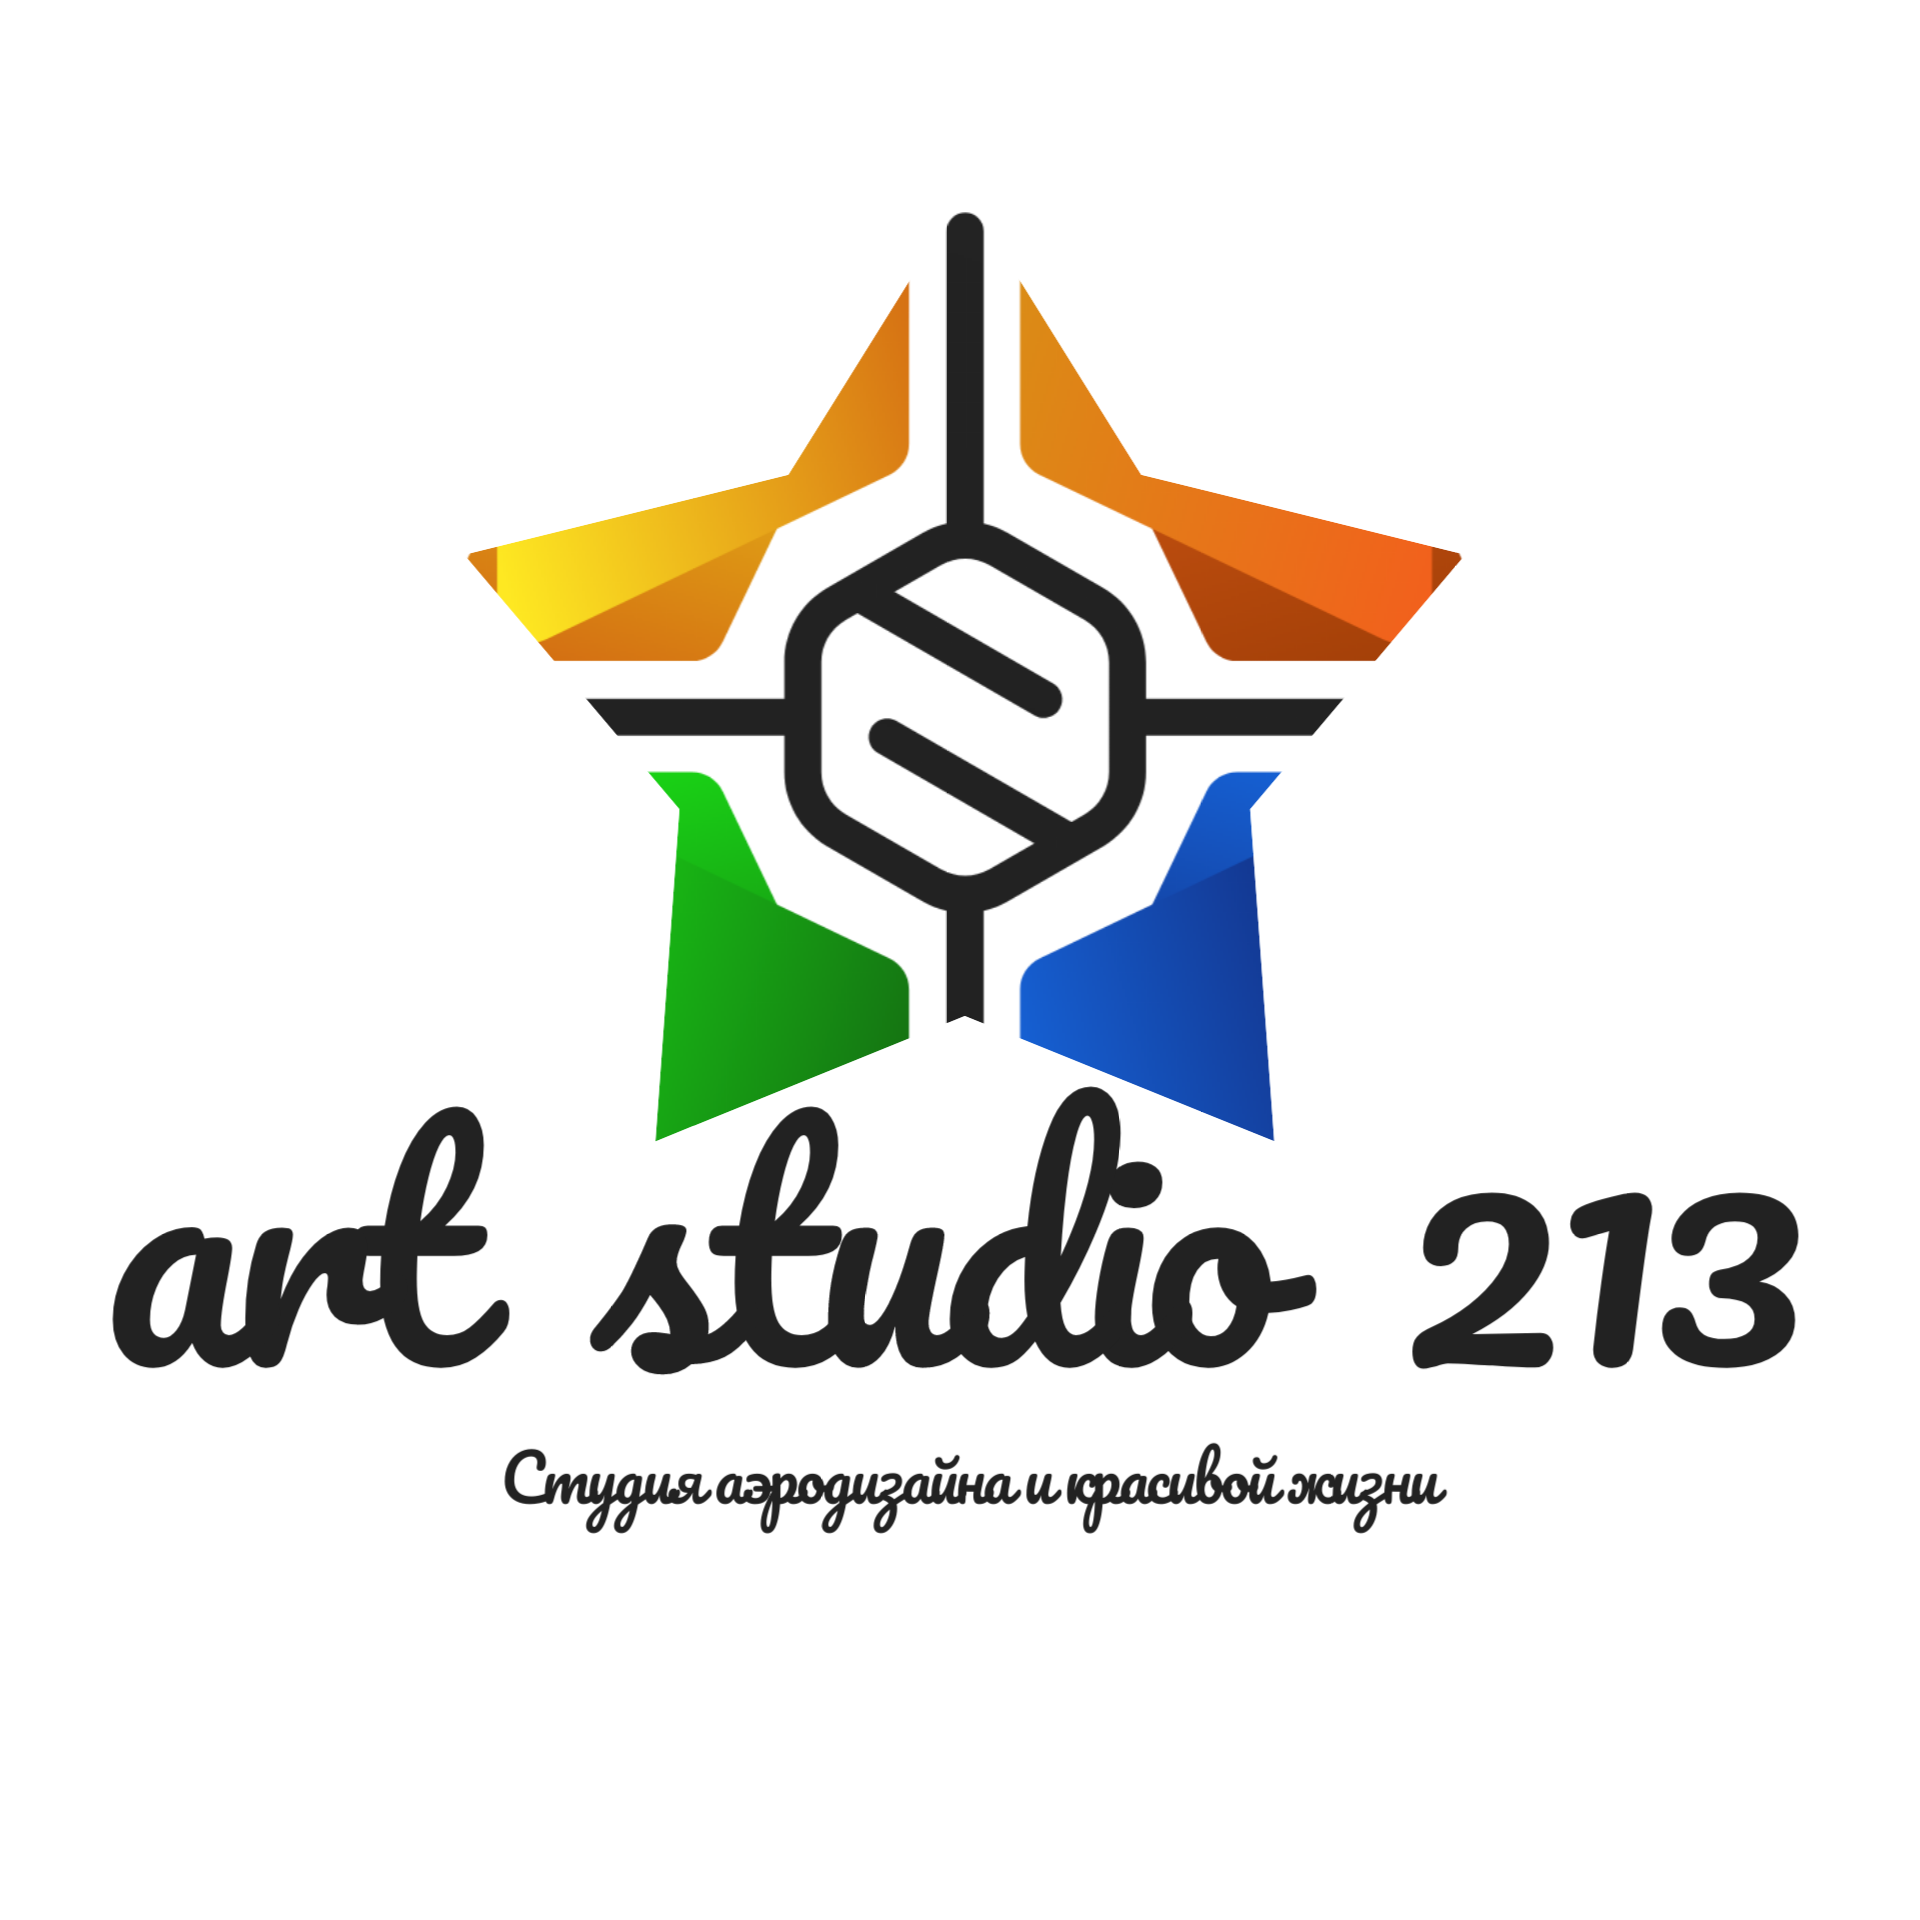 ART STUDIO 213